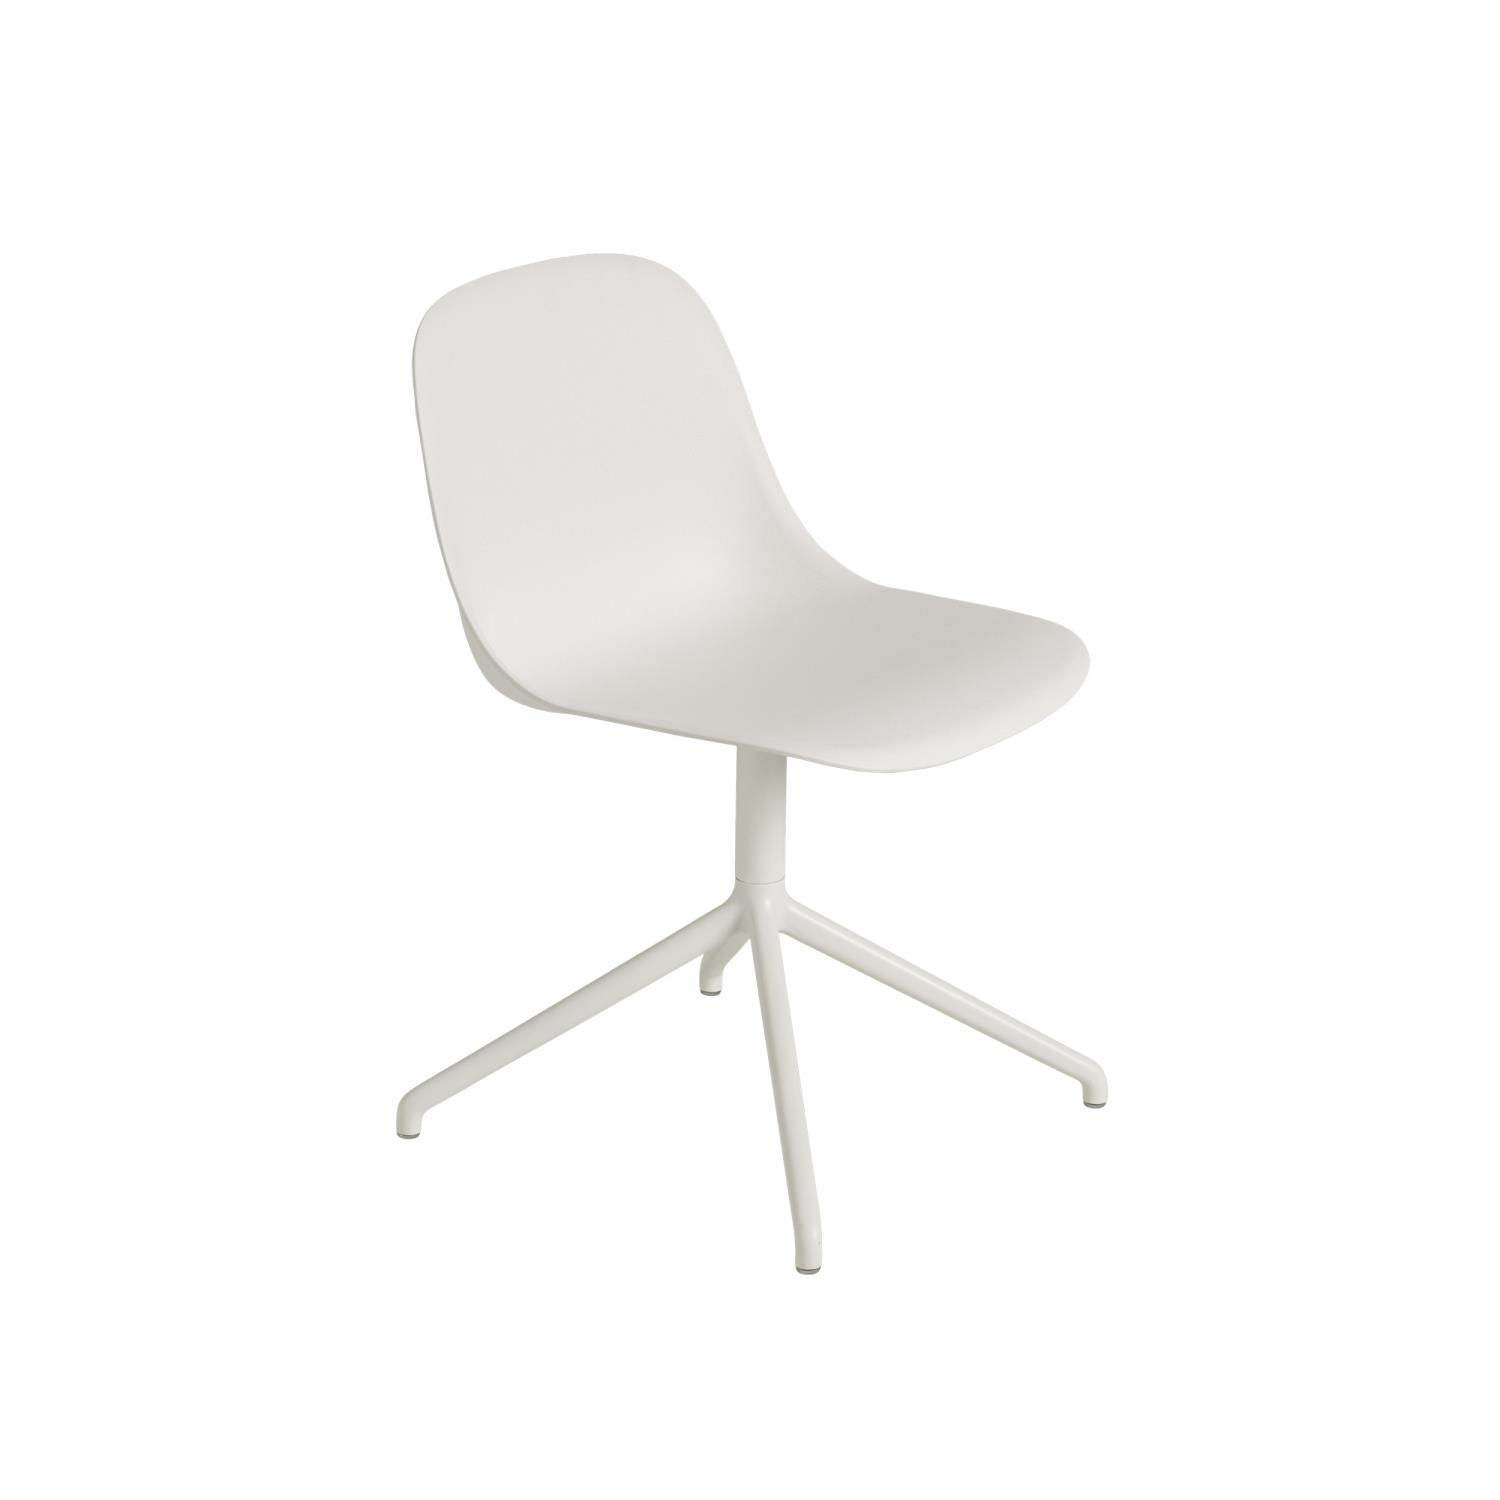 Muuto - Fiber Side Chair Swivel Return Base - Natural White and White